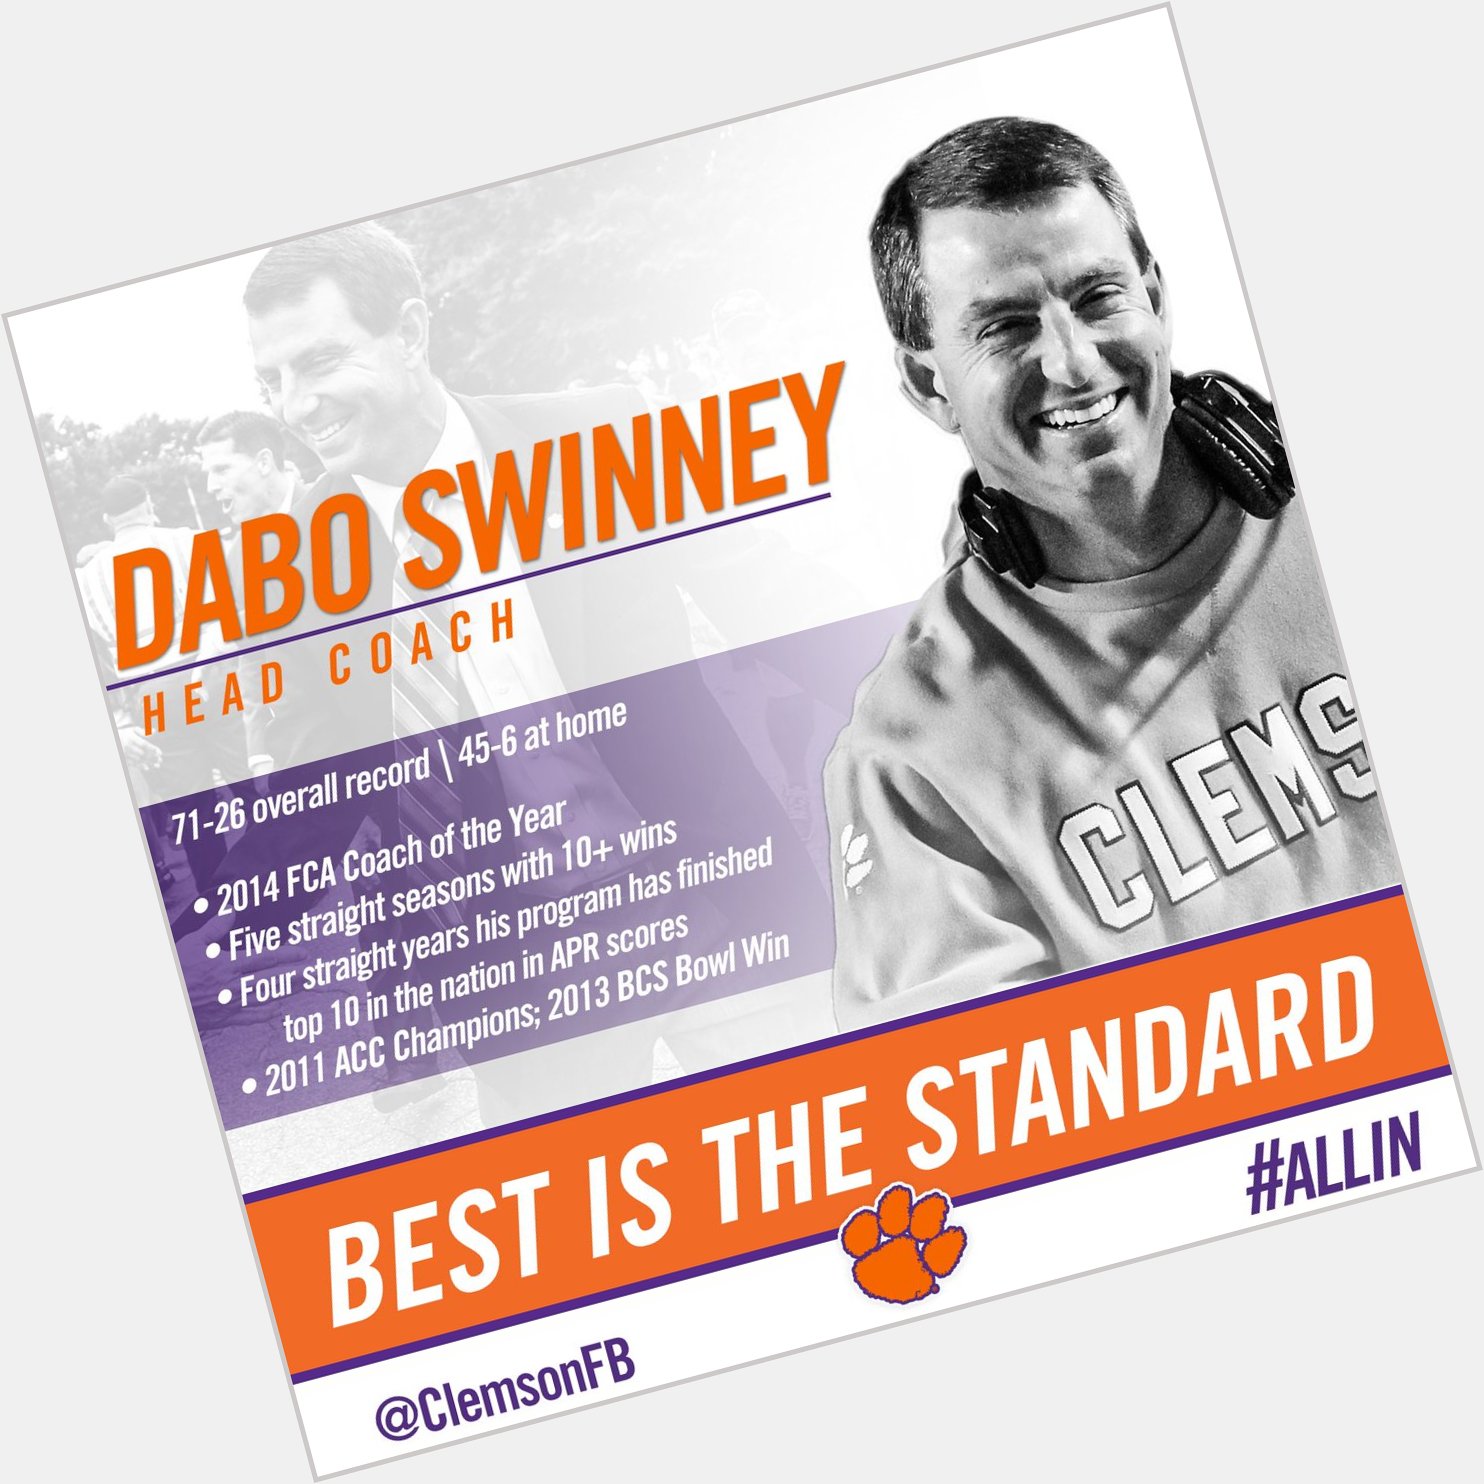 Happy birthday to the BEST coach in college football, Dabo Swinney! 